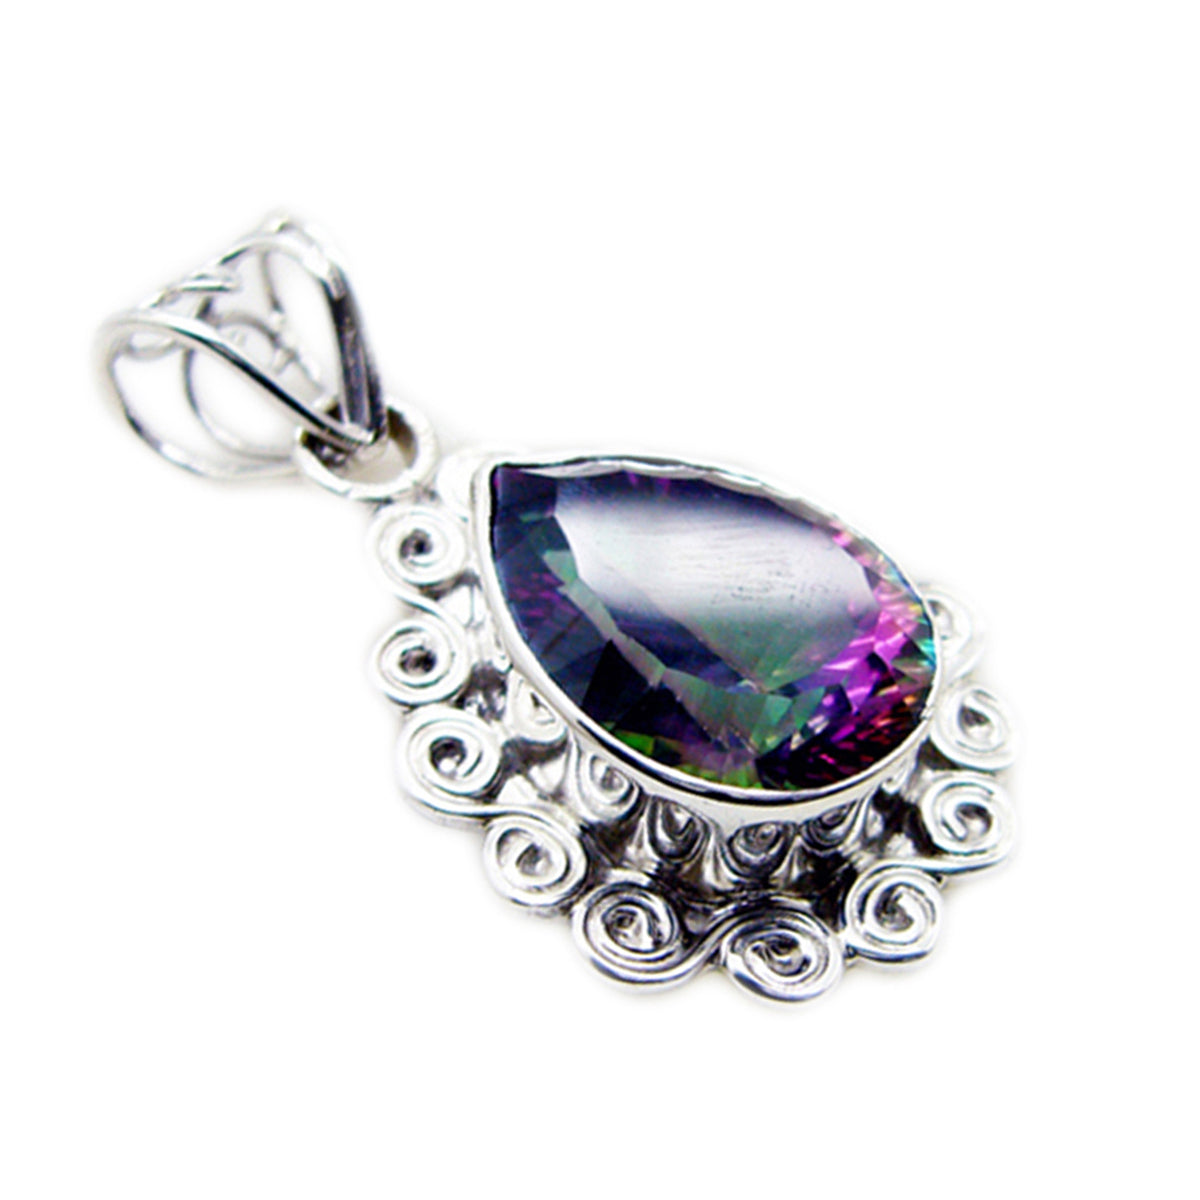 Riyo Spunky Gems Pear Faceted Multi Color Mystic Quartz Silver Pendant Gift For Wife